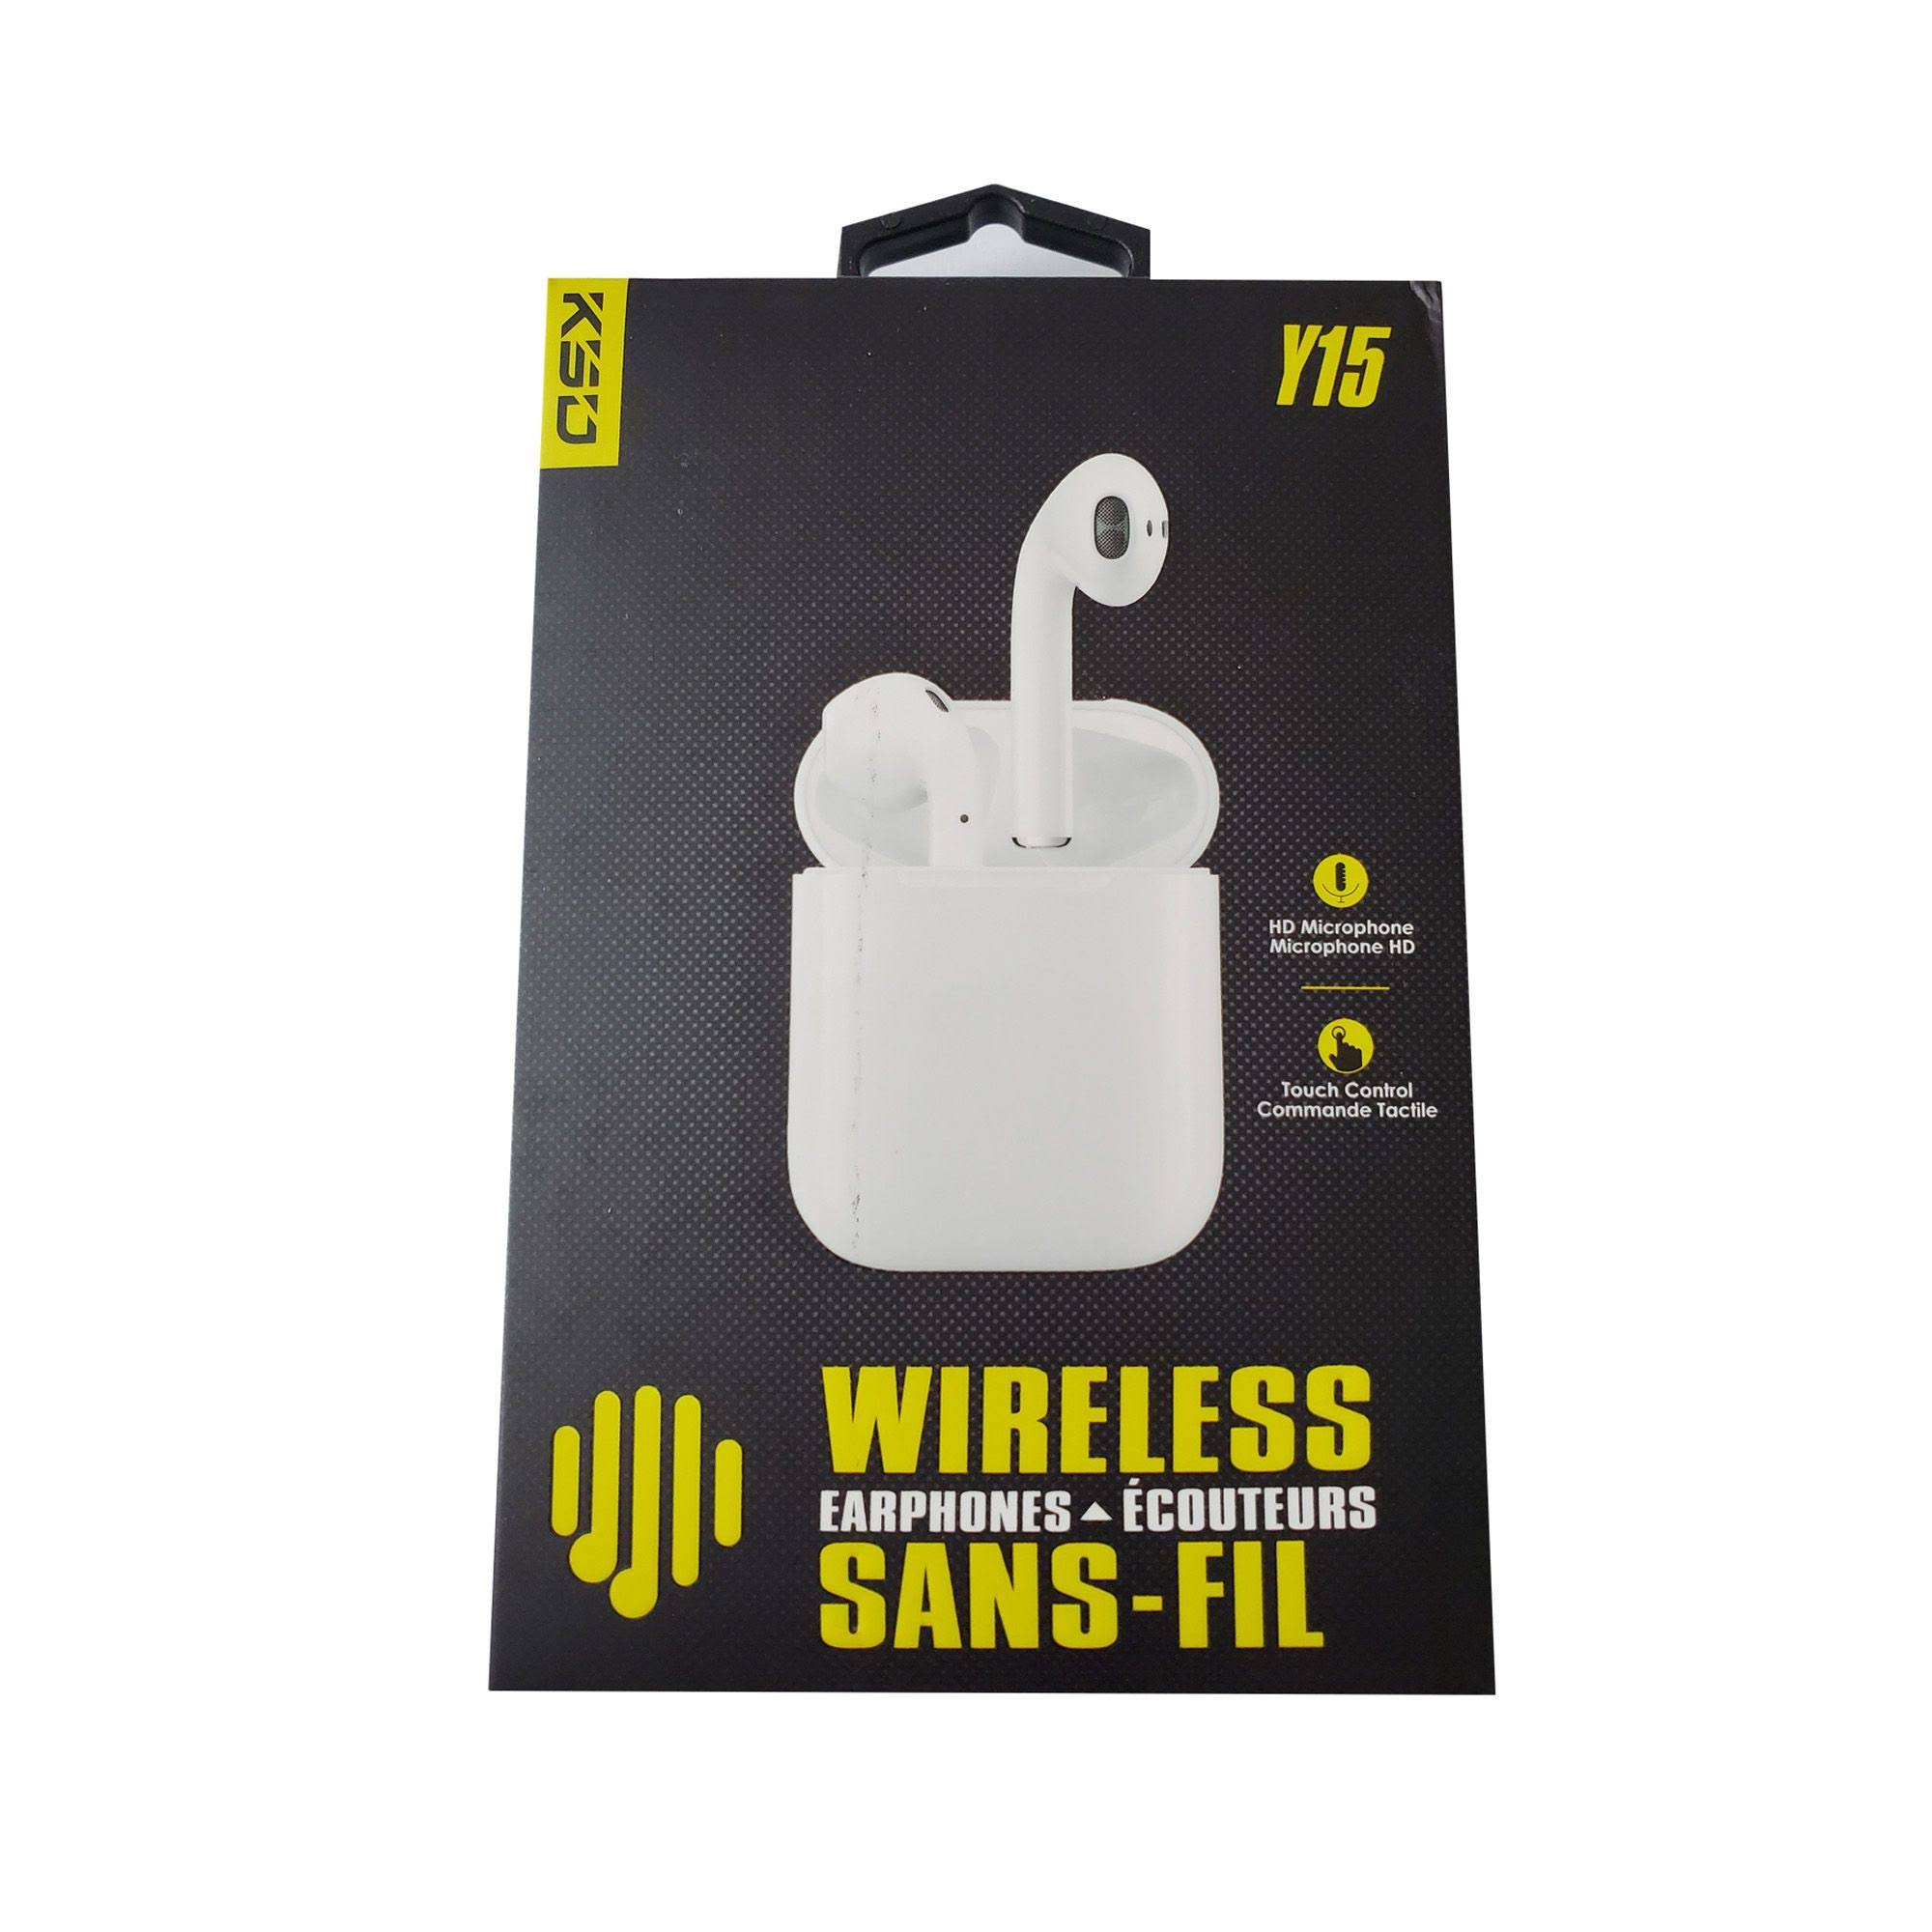 Y15 Wireless Earphones